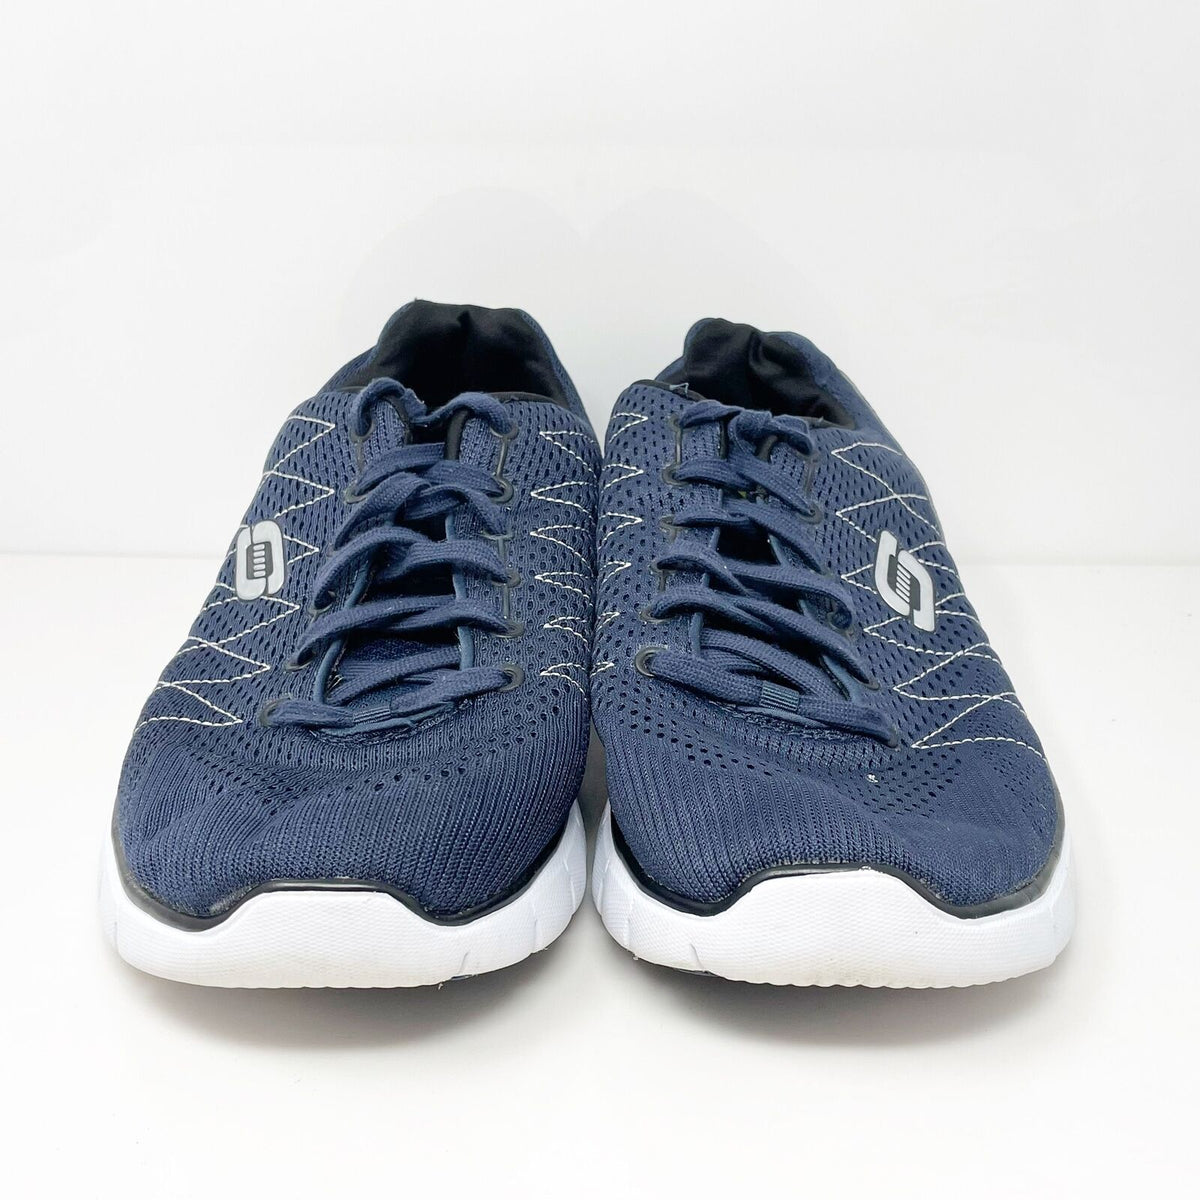 Skechers Mens Skech Flex 51442 Blue Running Shoes Sneakers Size 14 ...